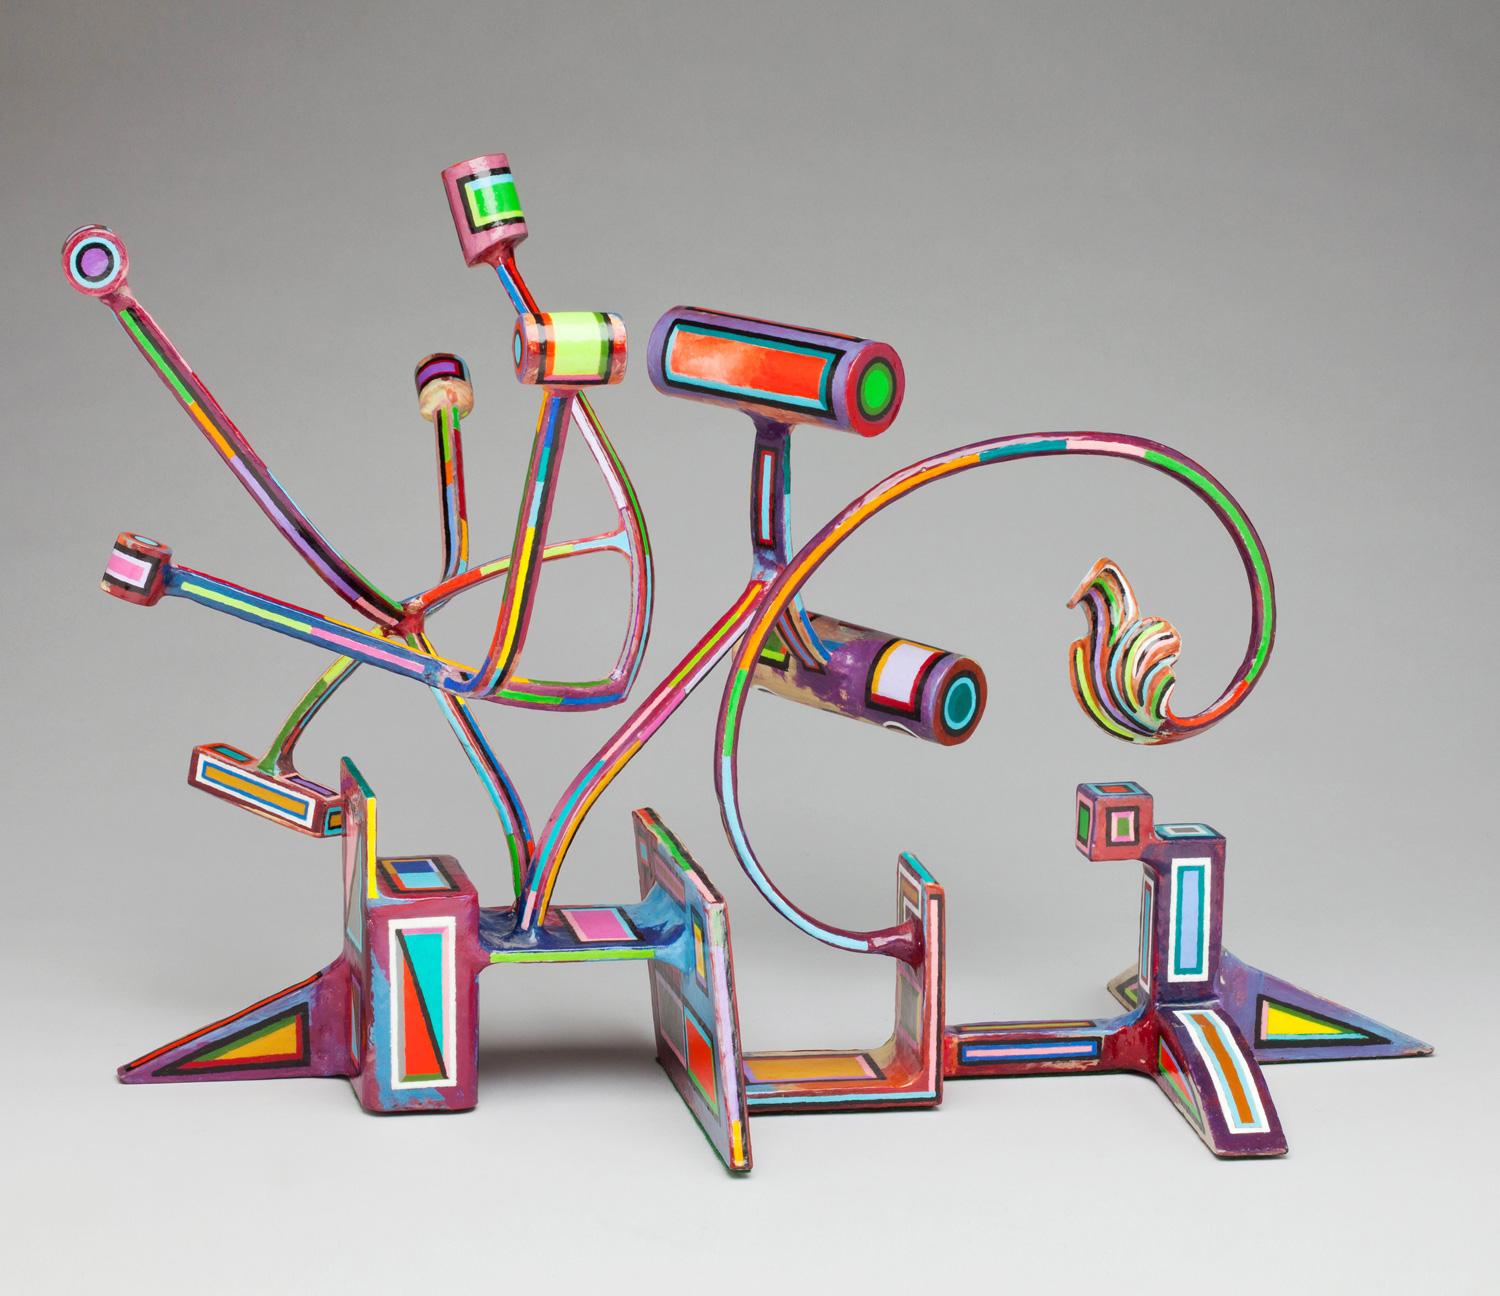 "Oga" colorful abstract sculpture - Sculpture by Joseph Slusky